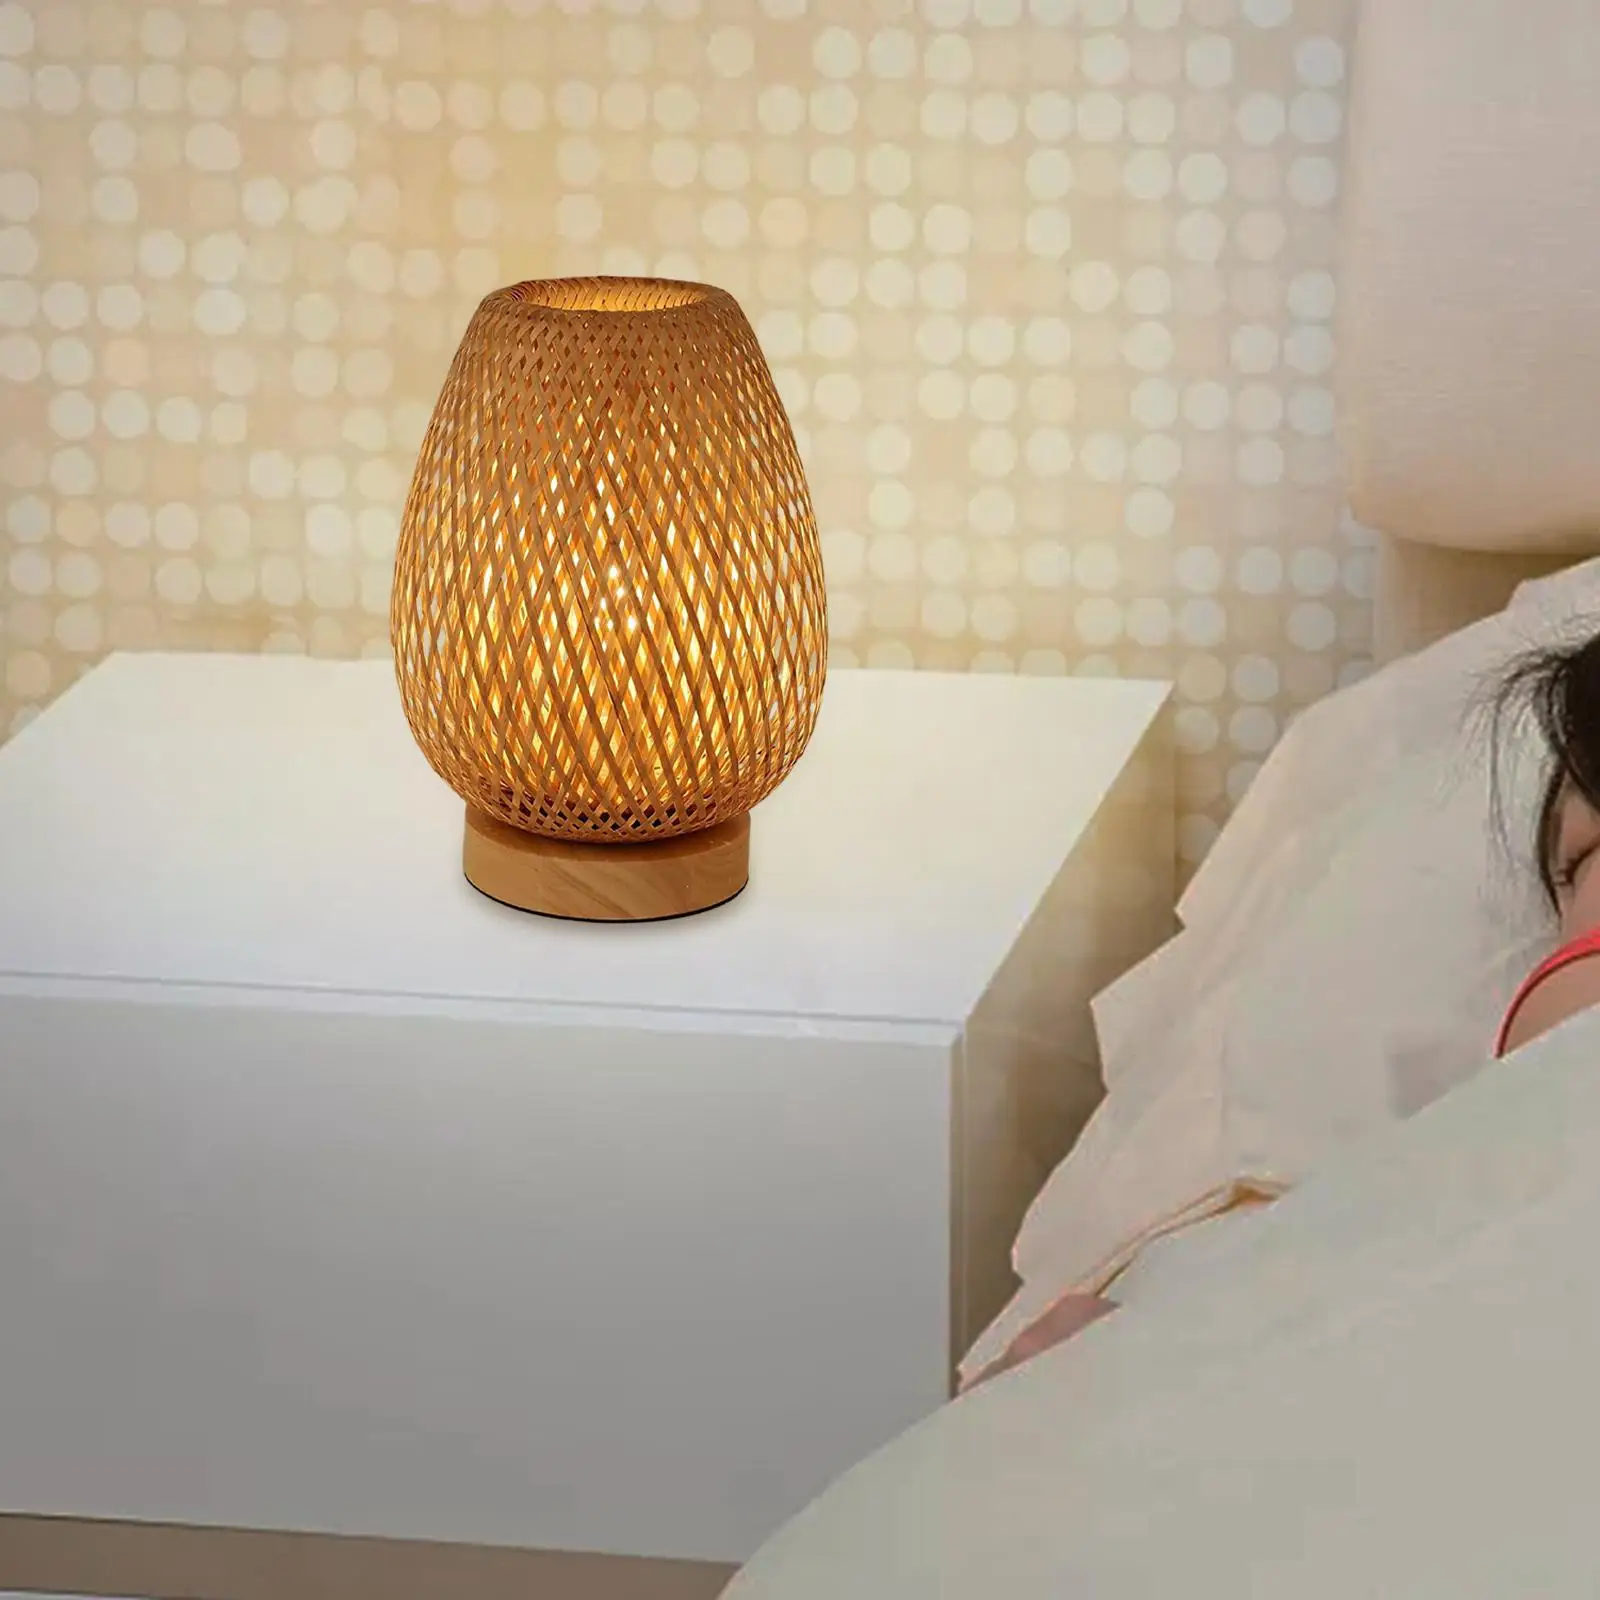 Bamboo Lampshade NightStand Lamp Decorative Simple Lantern for Office Bedroom EU Plug